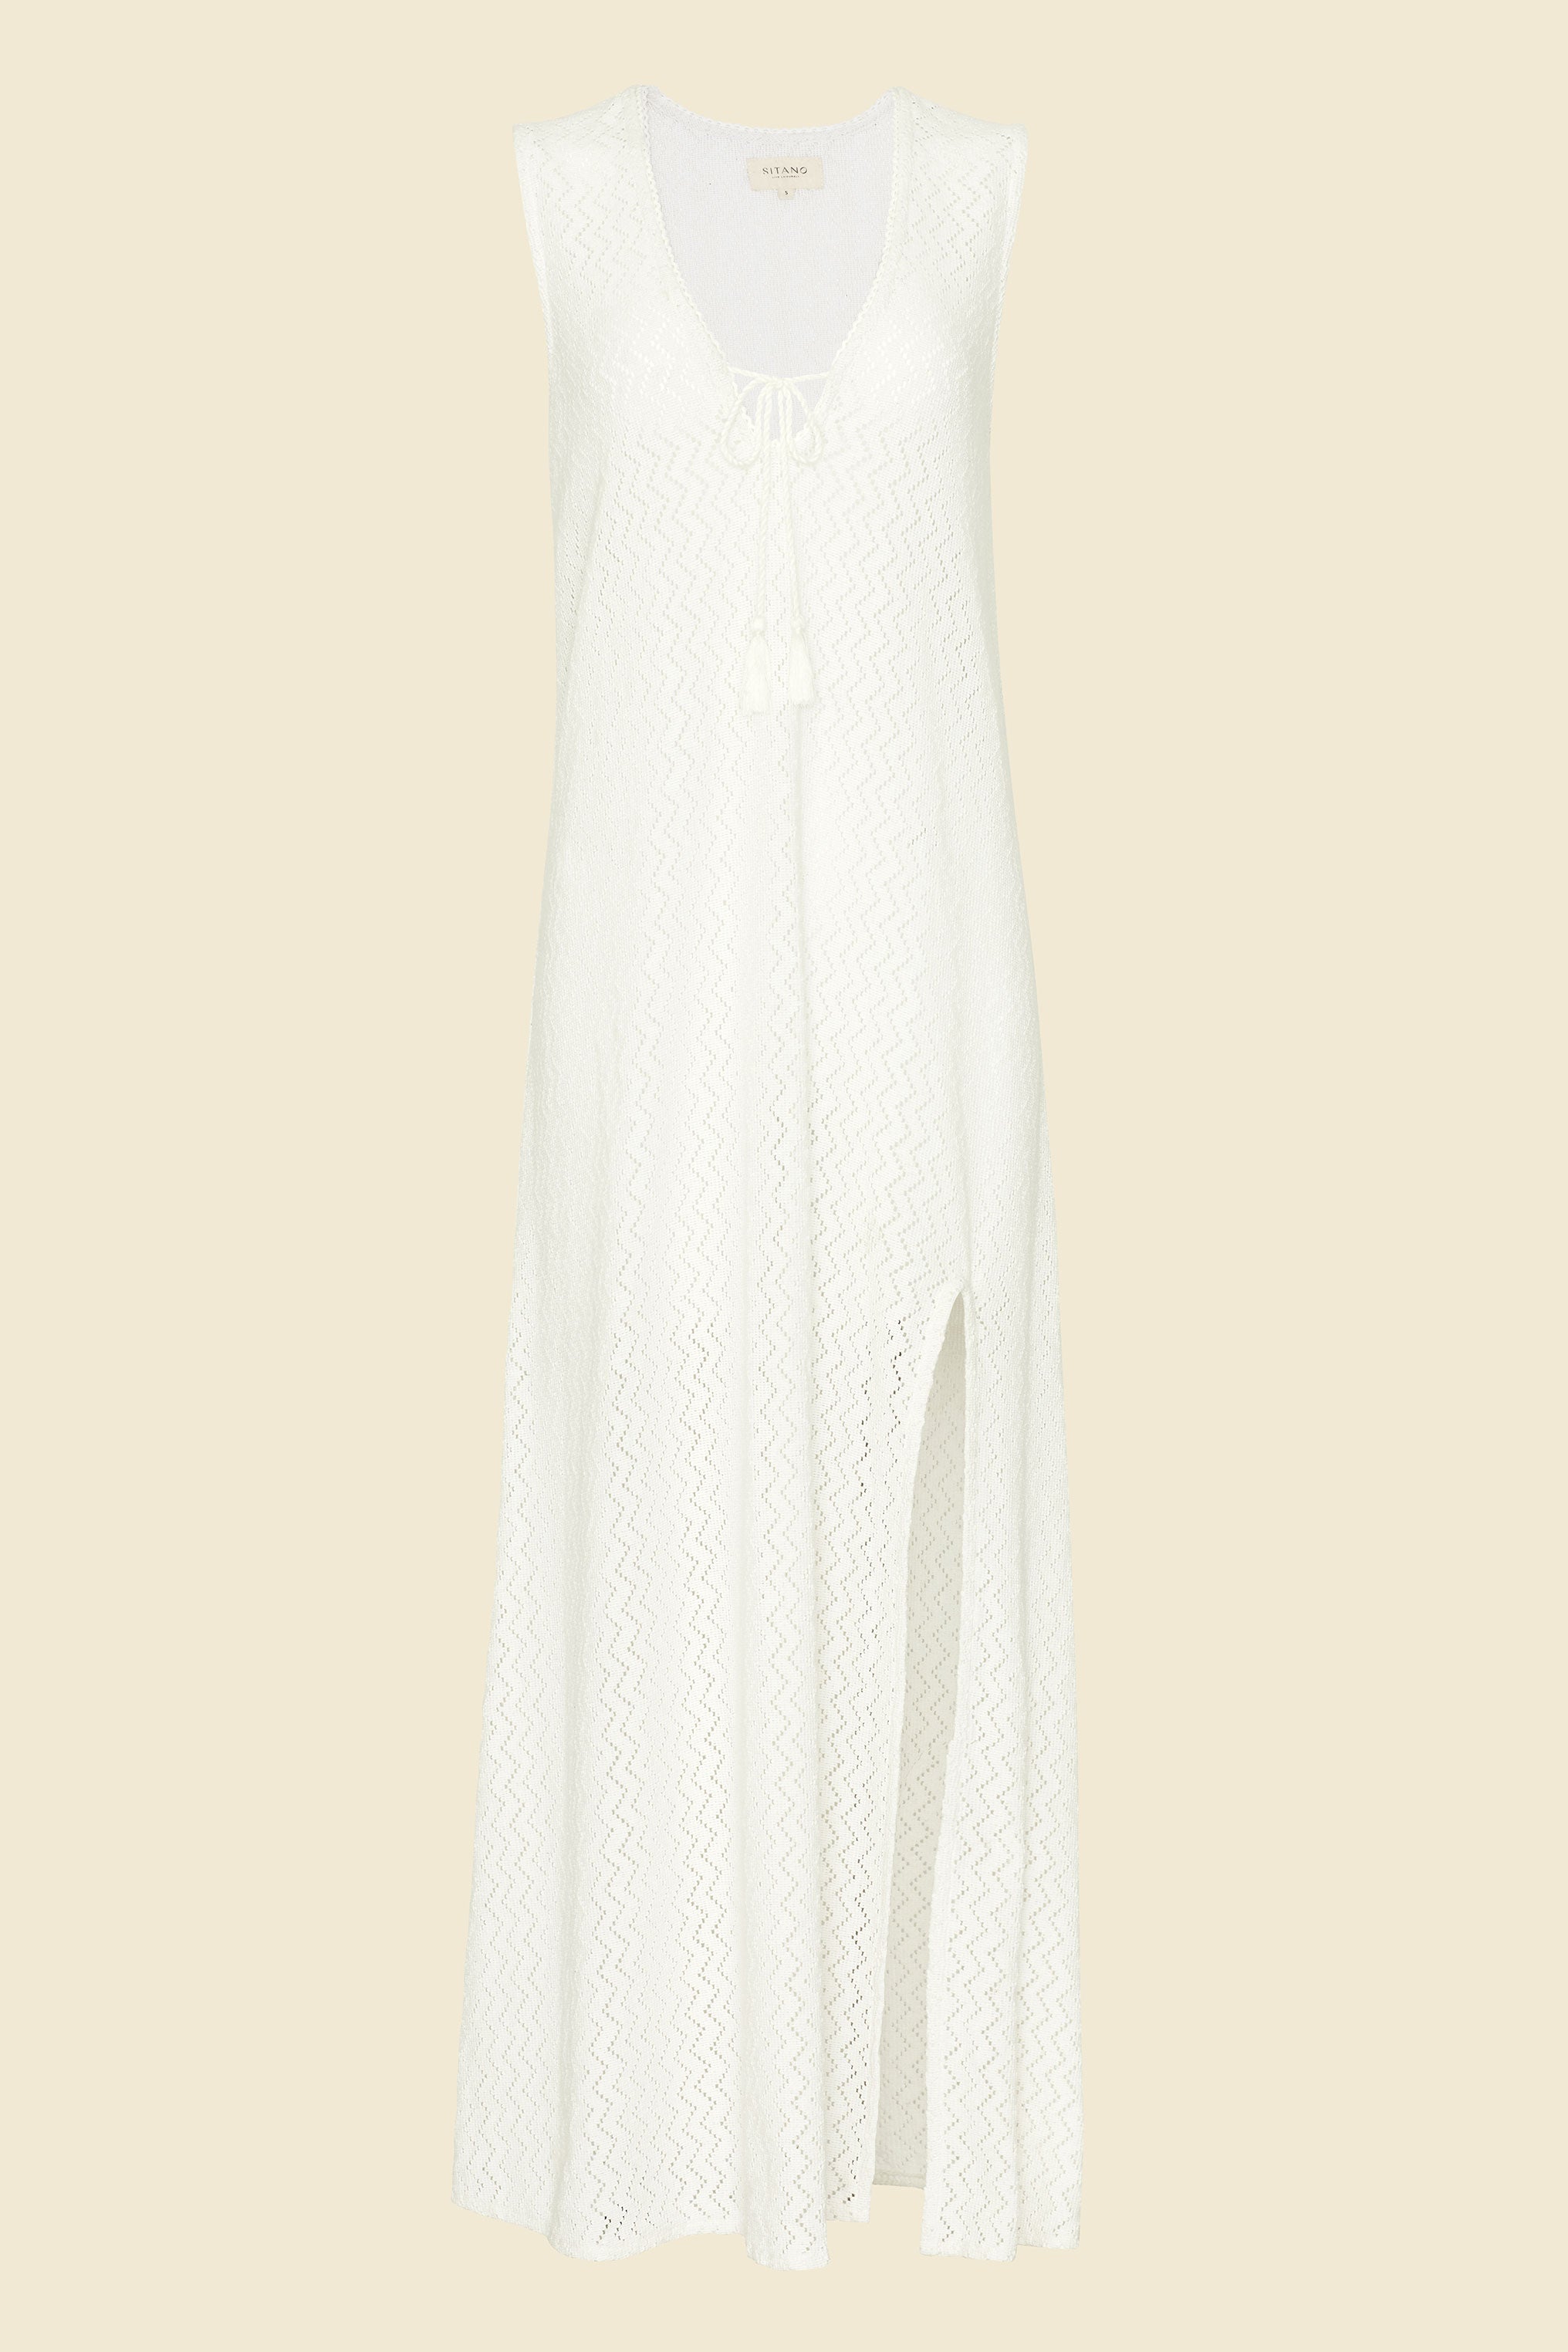 SITANO Cover Up Sorrento Dress - White Crochet (Pre-order)